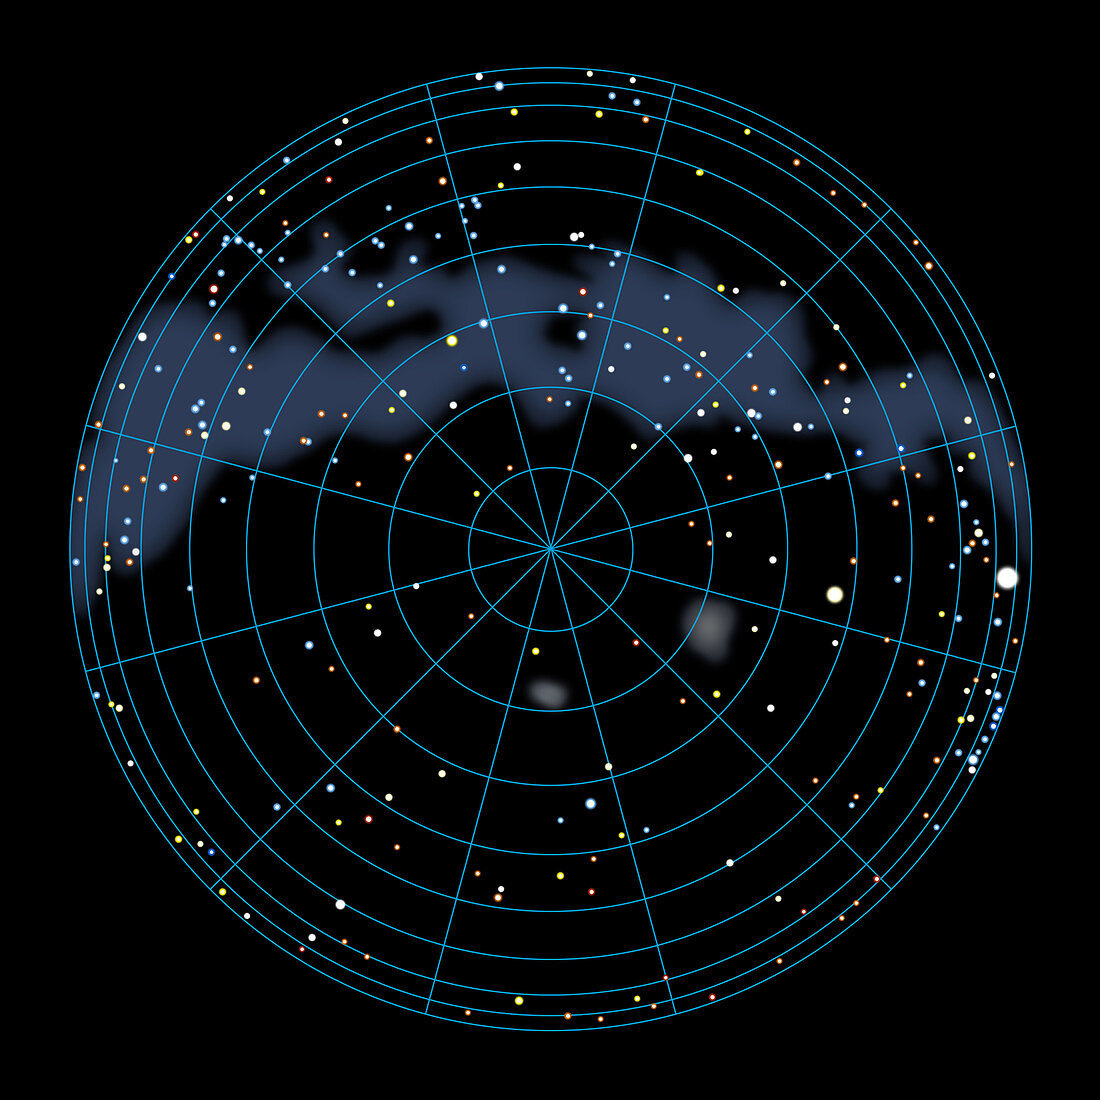 Artwork of the celestial southern hemisphere